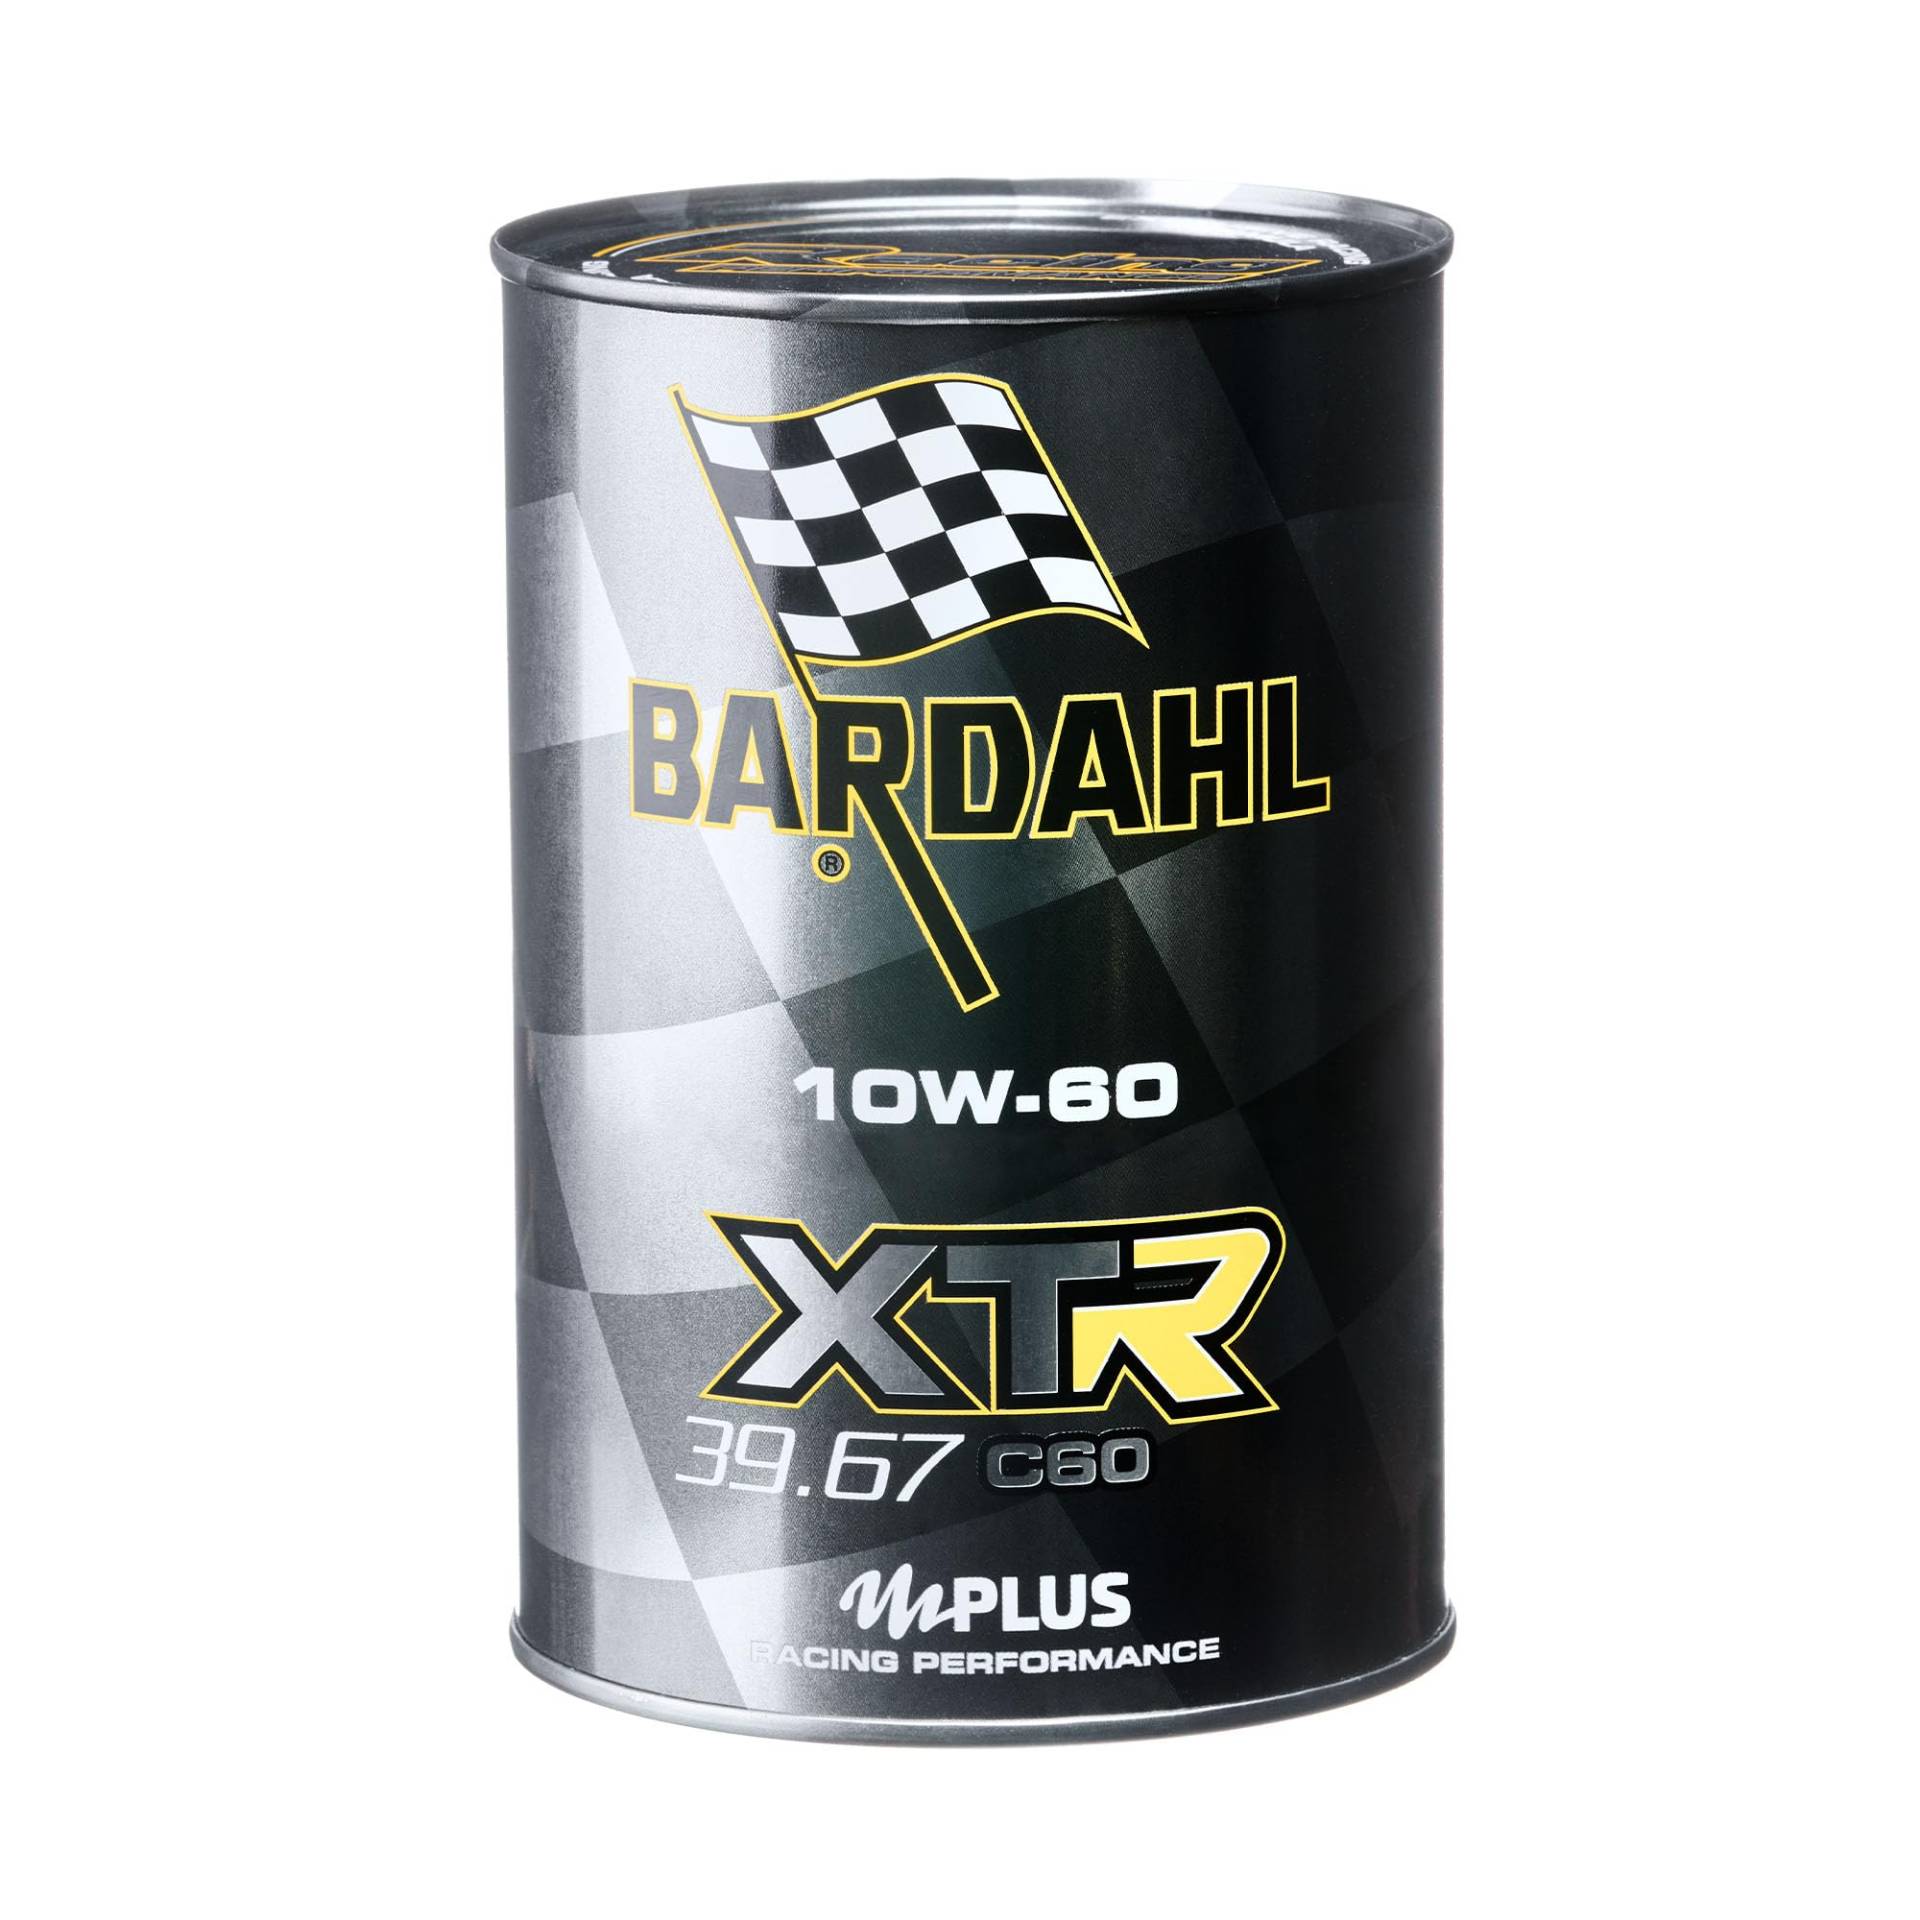 100% Kunststoff 2 Liter Bardahl XTR 39.67 C60 RACING 10 W-60 Performance Level SAE 10 W-60 von Bardahl